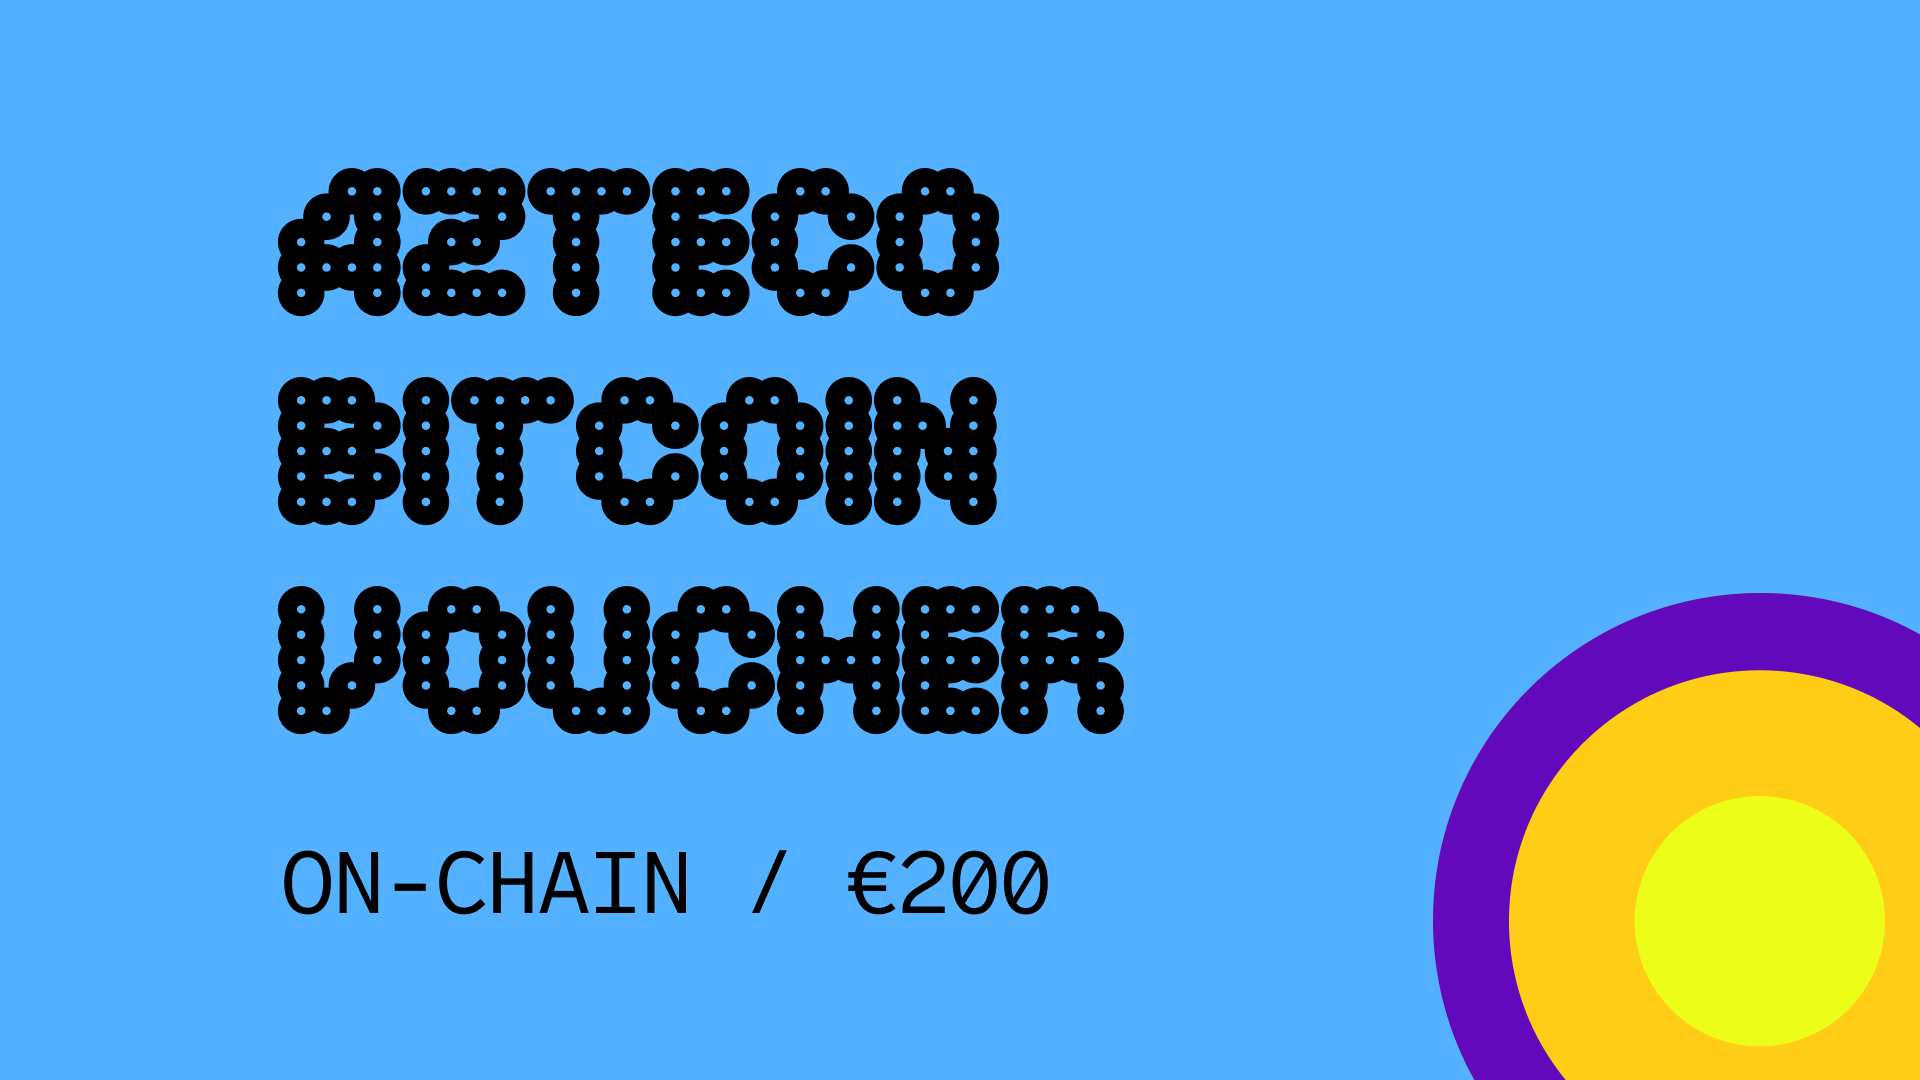 Azteco Bitcoin On-Chain €200 Voucher 225.98 usd